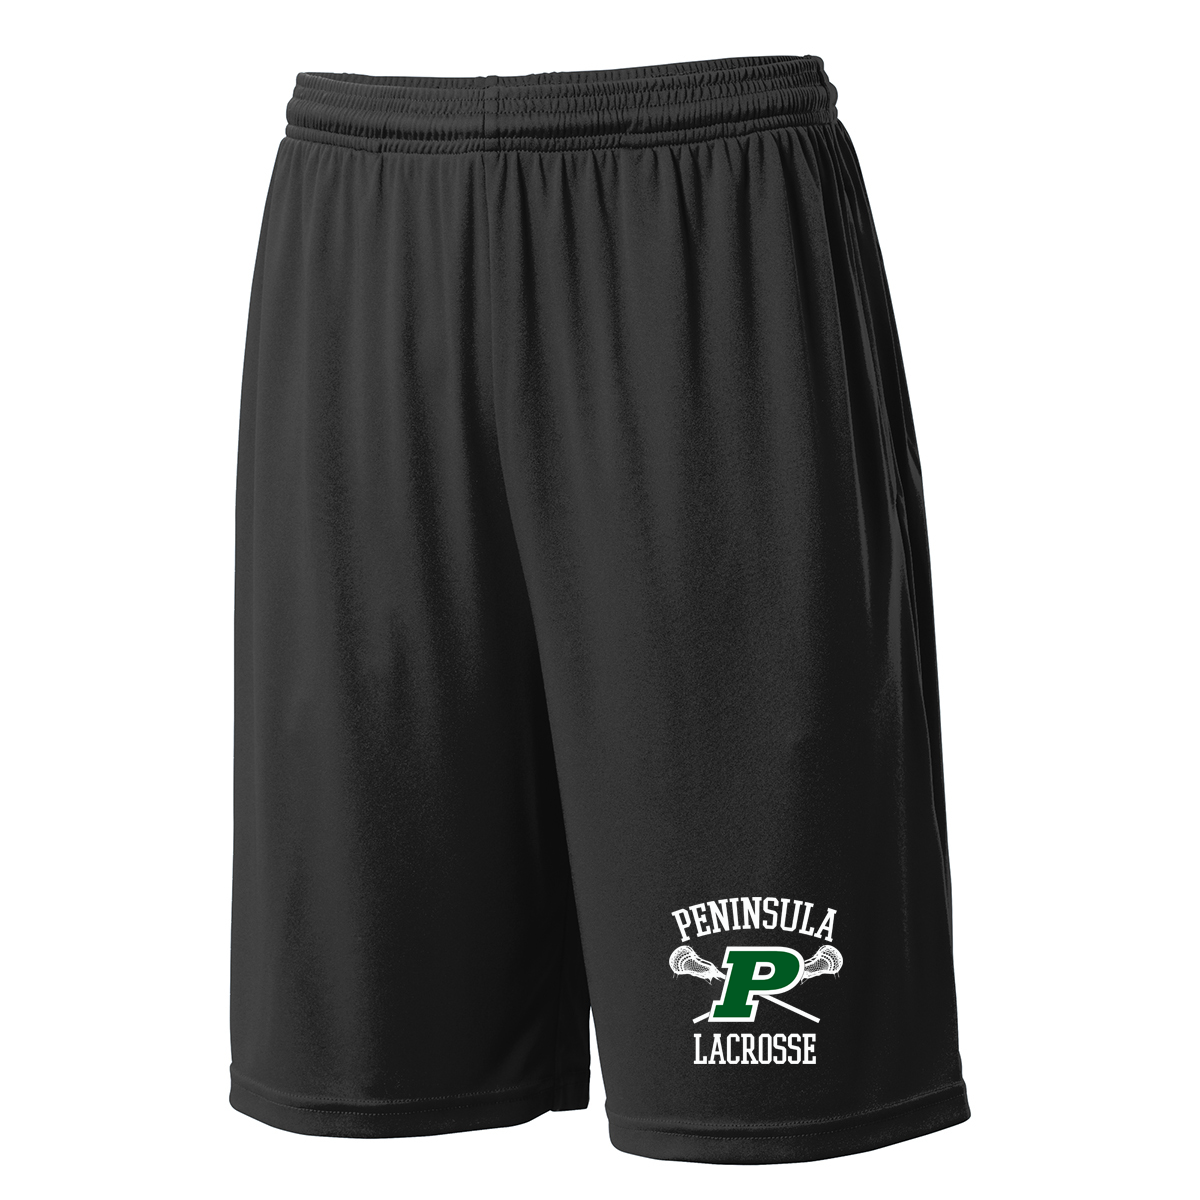 Peninsula Lacrosse Shorts